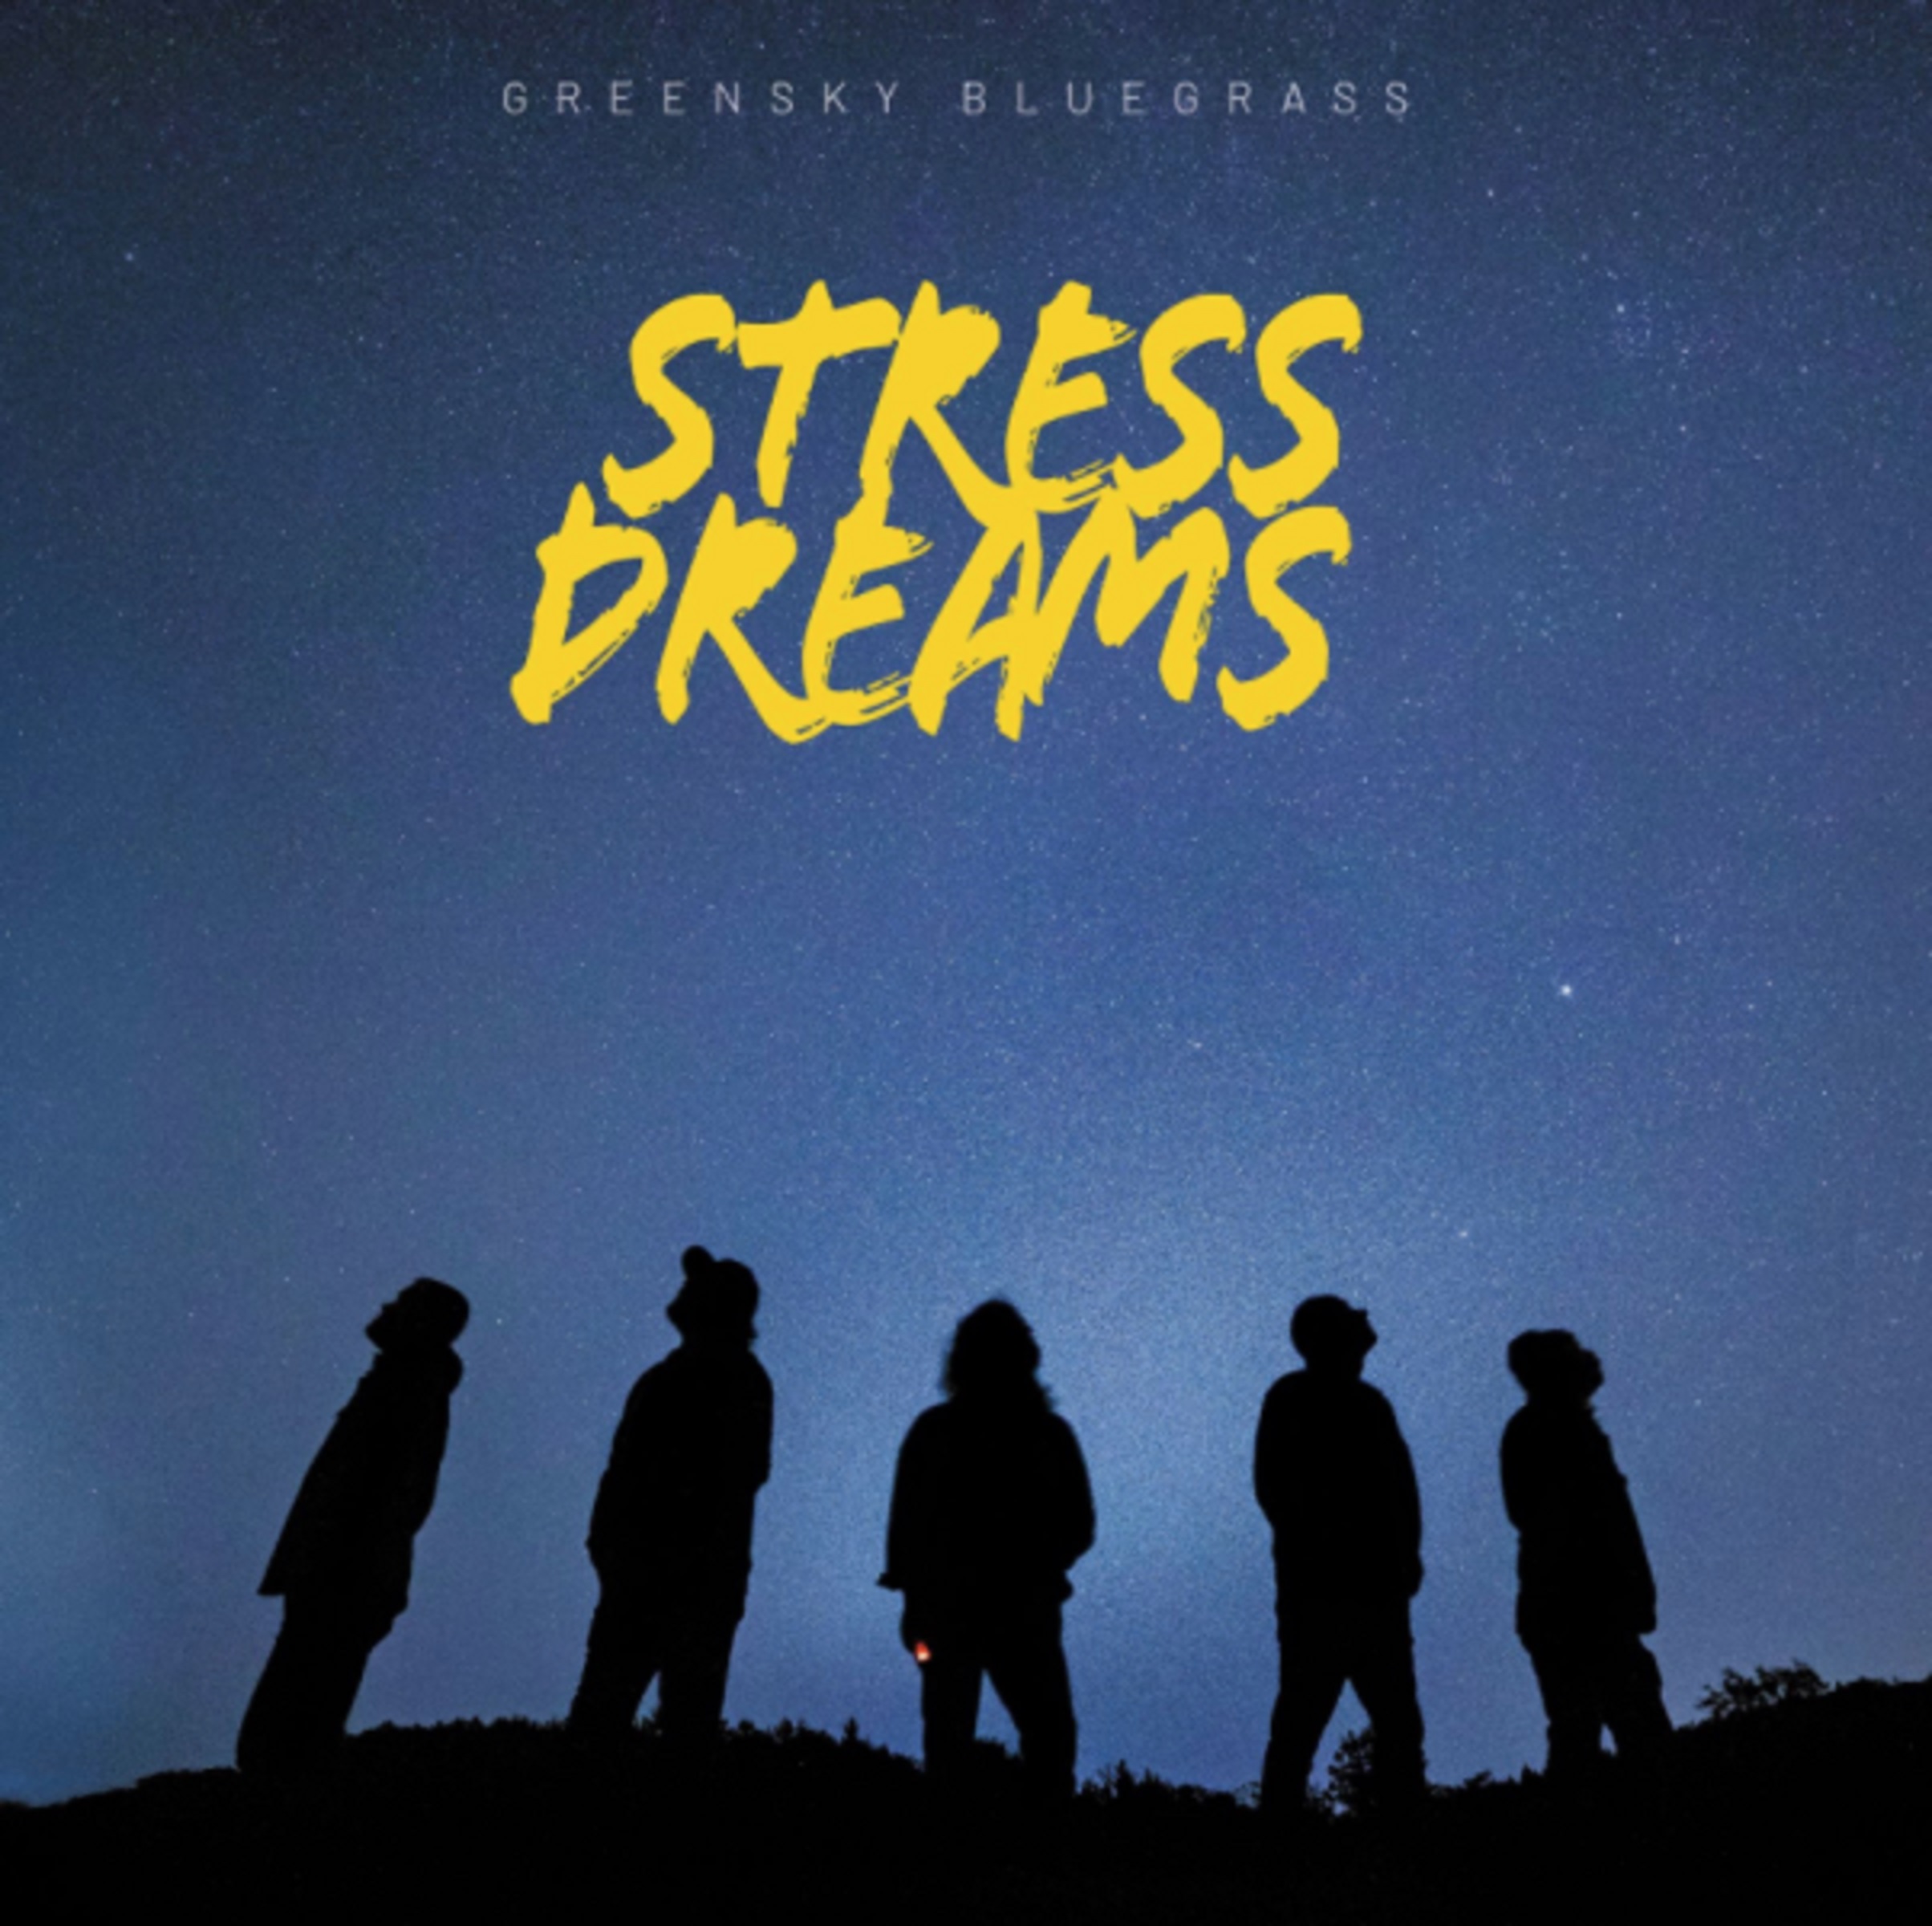 Greensky Bluegrass release eighth studio album Stress Dreams; plus winter tour kickoff